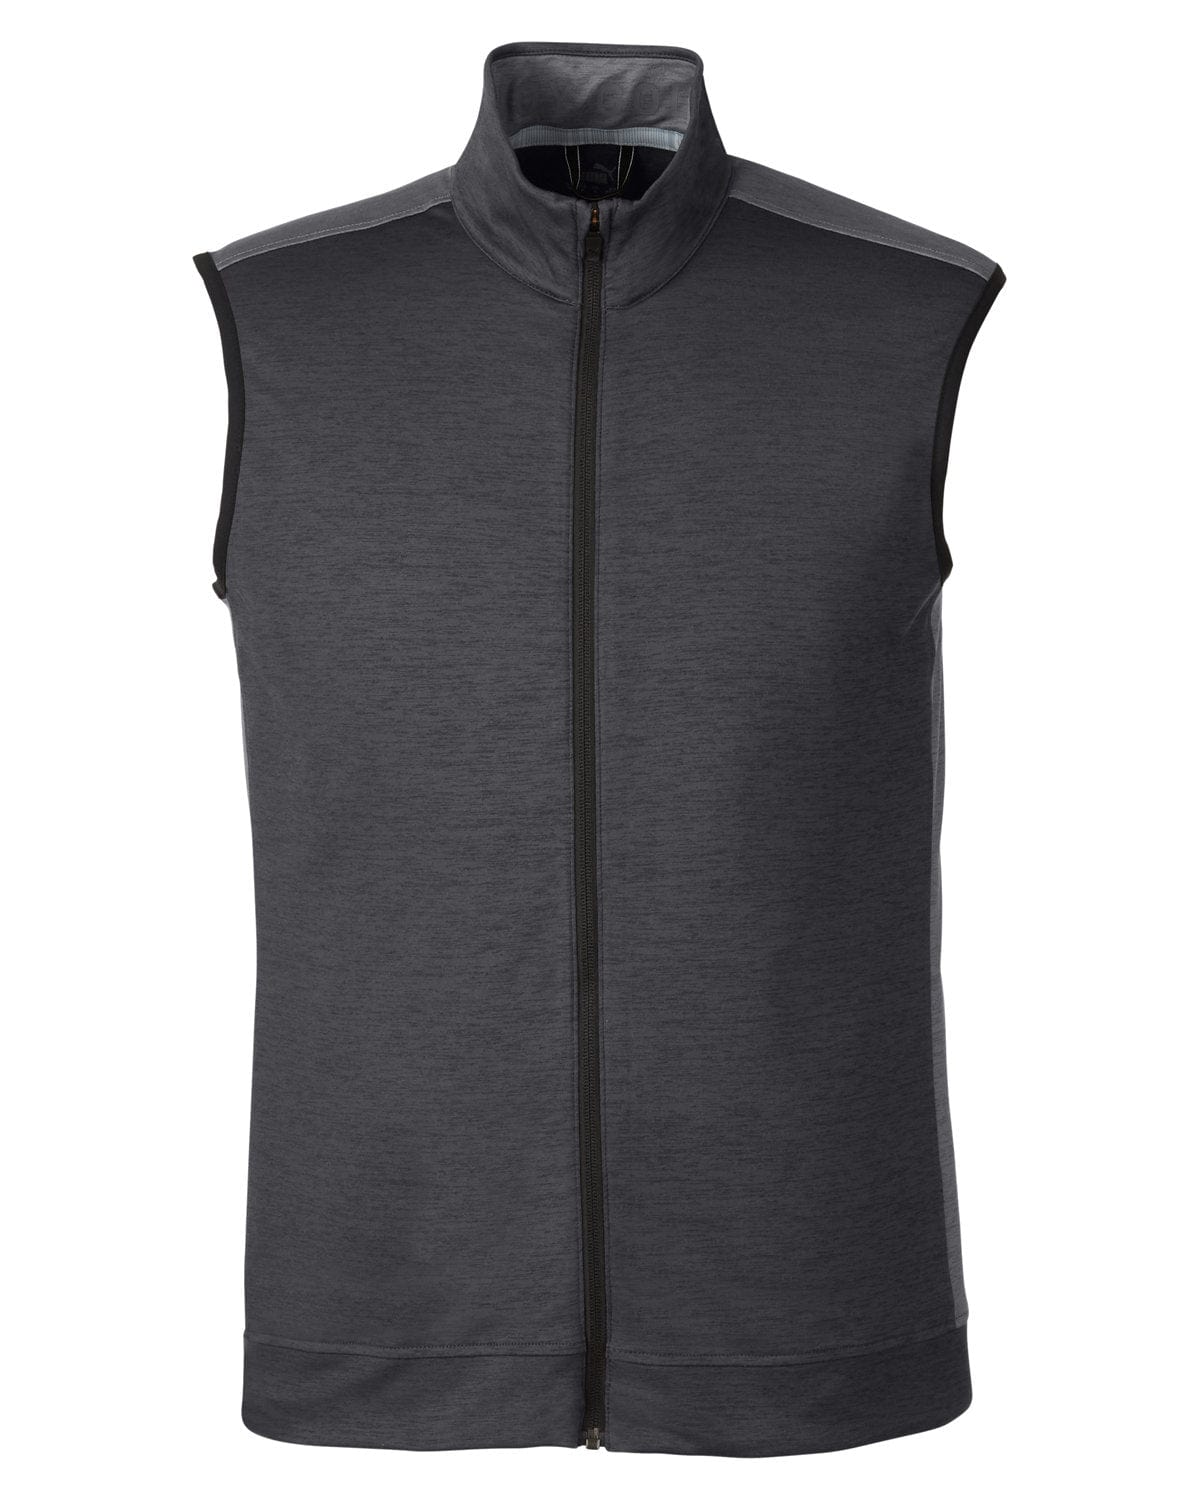 Puma Golf Outerwear S / Puma Black Heather/Quiet Shade Puma - Men's T7 Cloudspun Vest